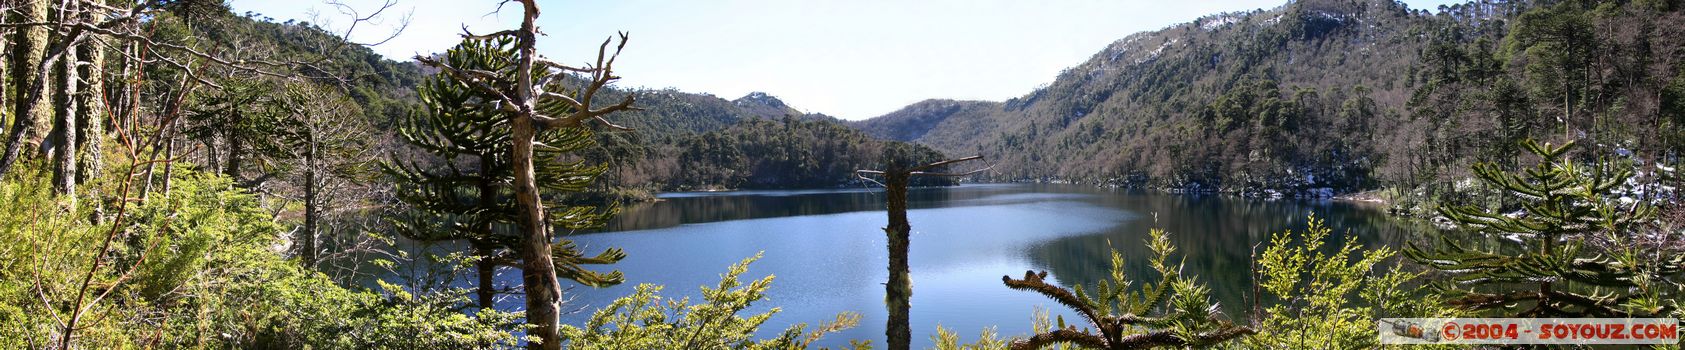 Parque Nacional Huerquehue - Lago Verde - panorama
Mots-clés: chile panorama